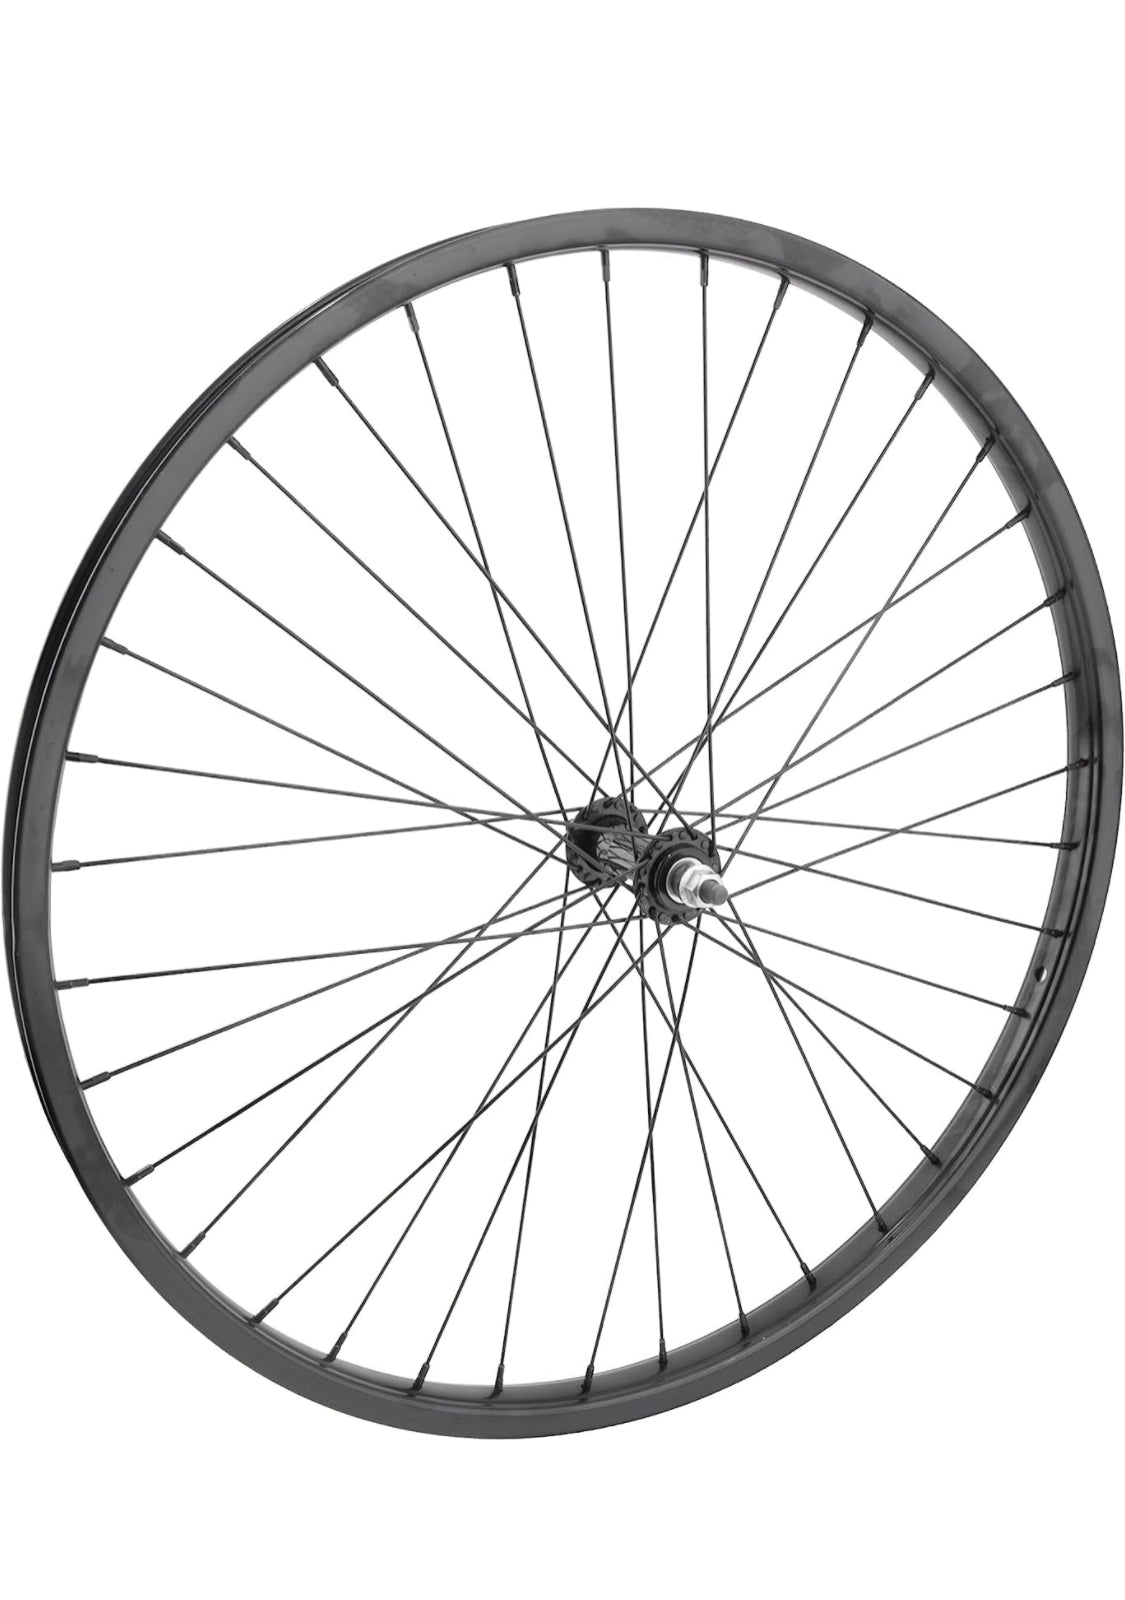 Wheel Master Front Bicycle Wheel 26", 36 Spoke, Steel Rim, Bolt-on Axle, Black